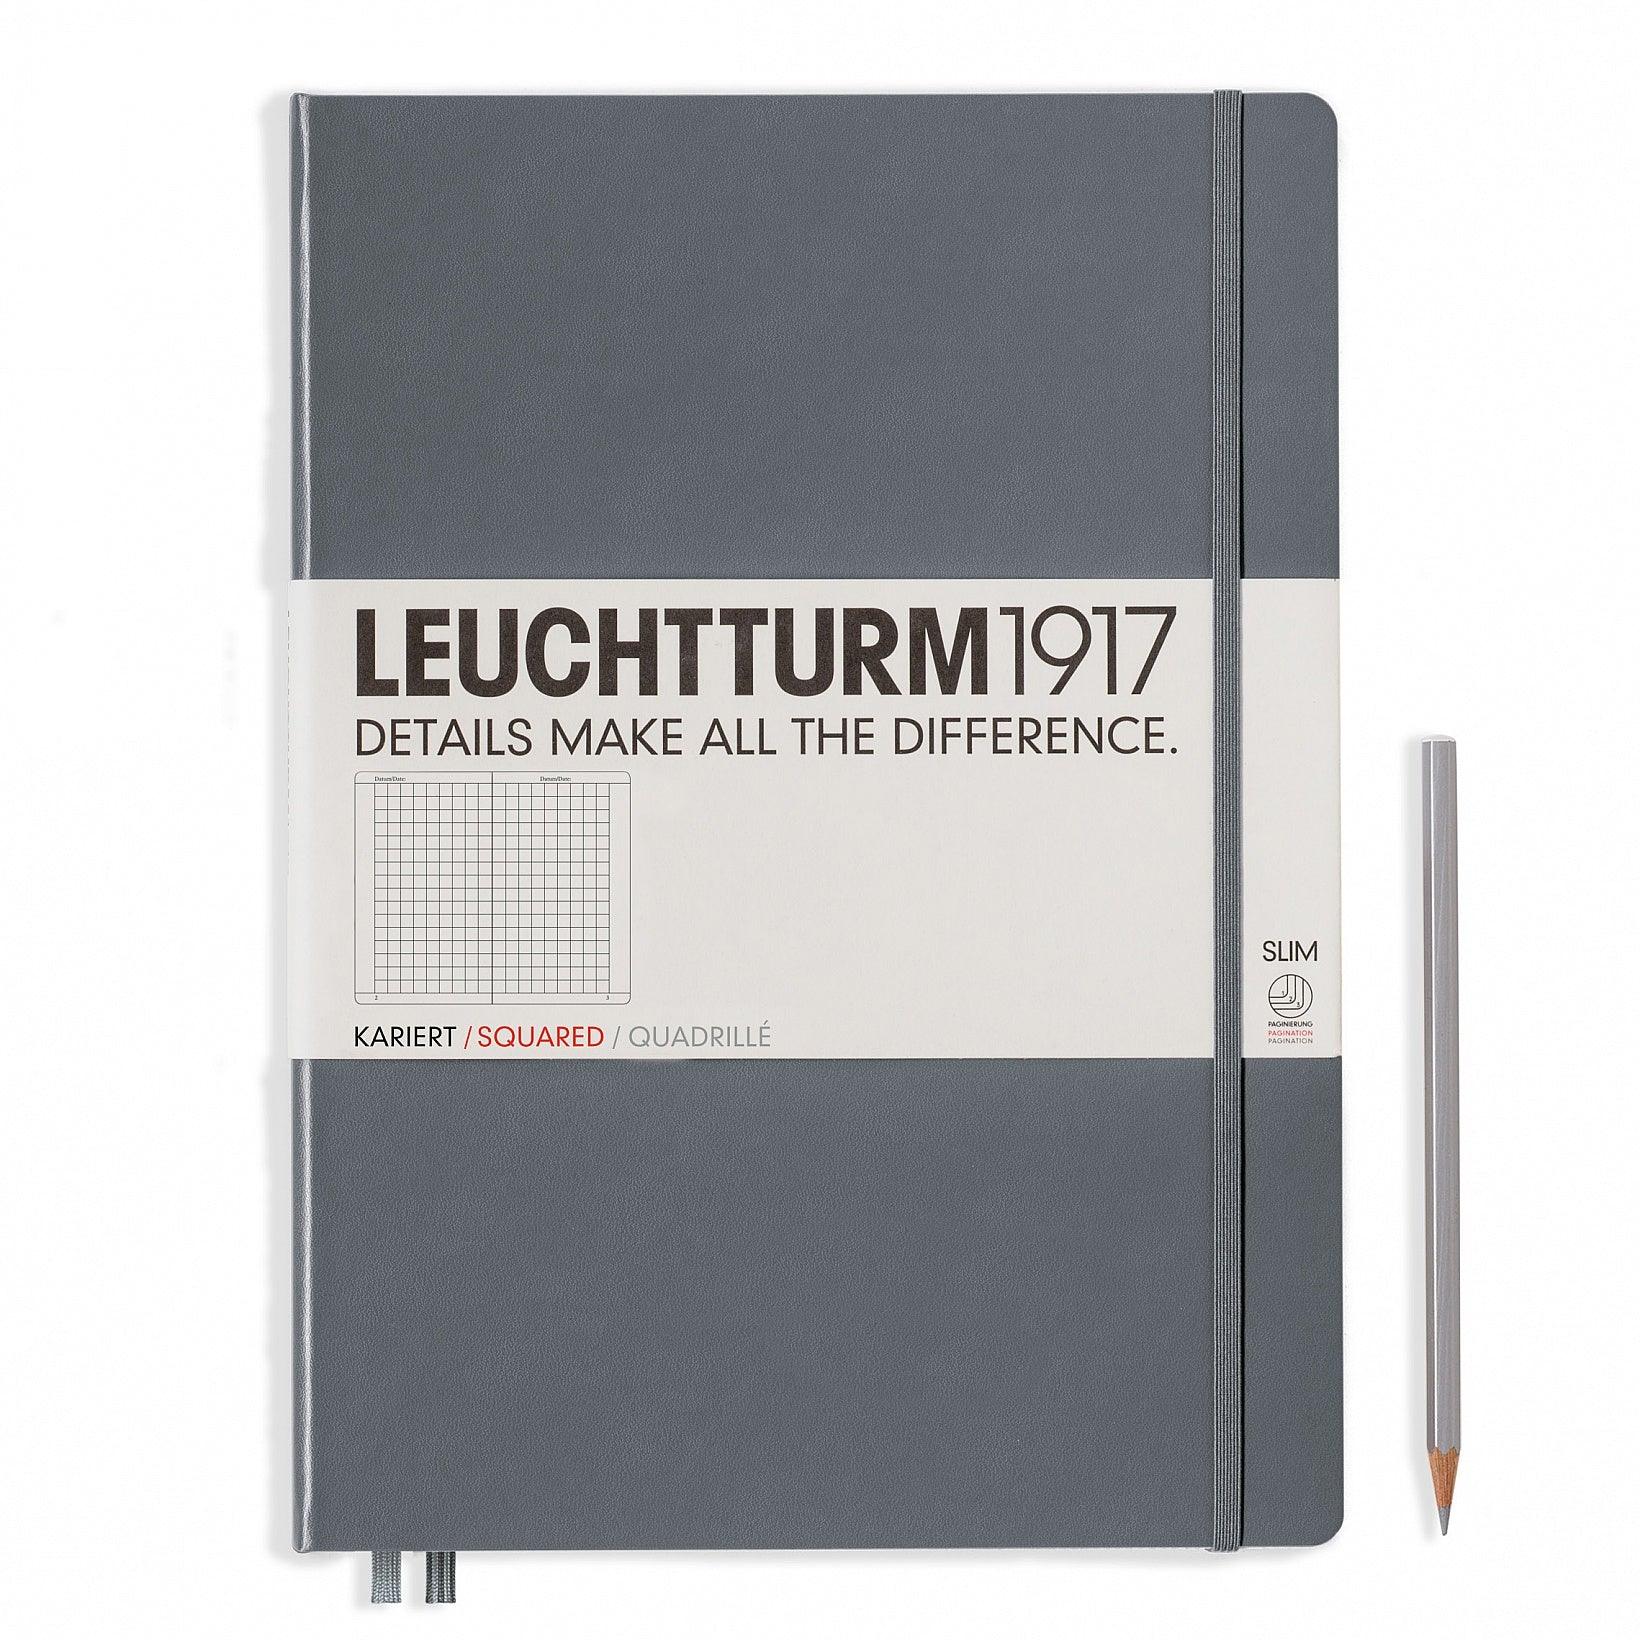 Leuchtturm1917 Master Slim Squared Hardcover Notebook - Laywine's